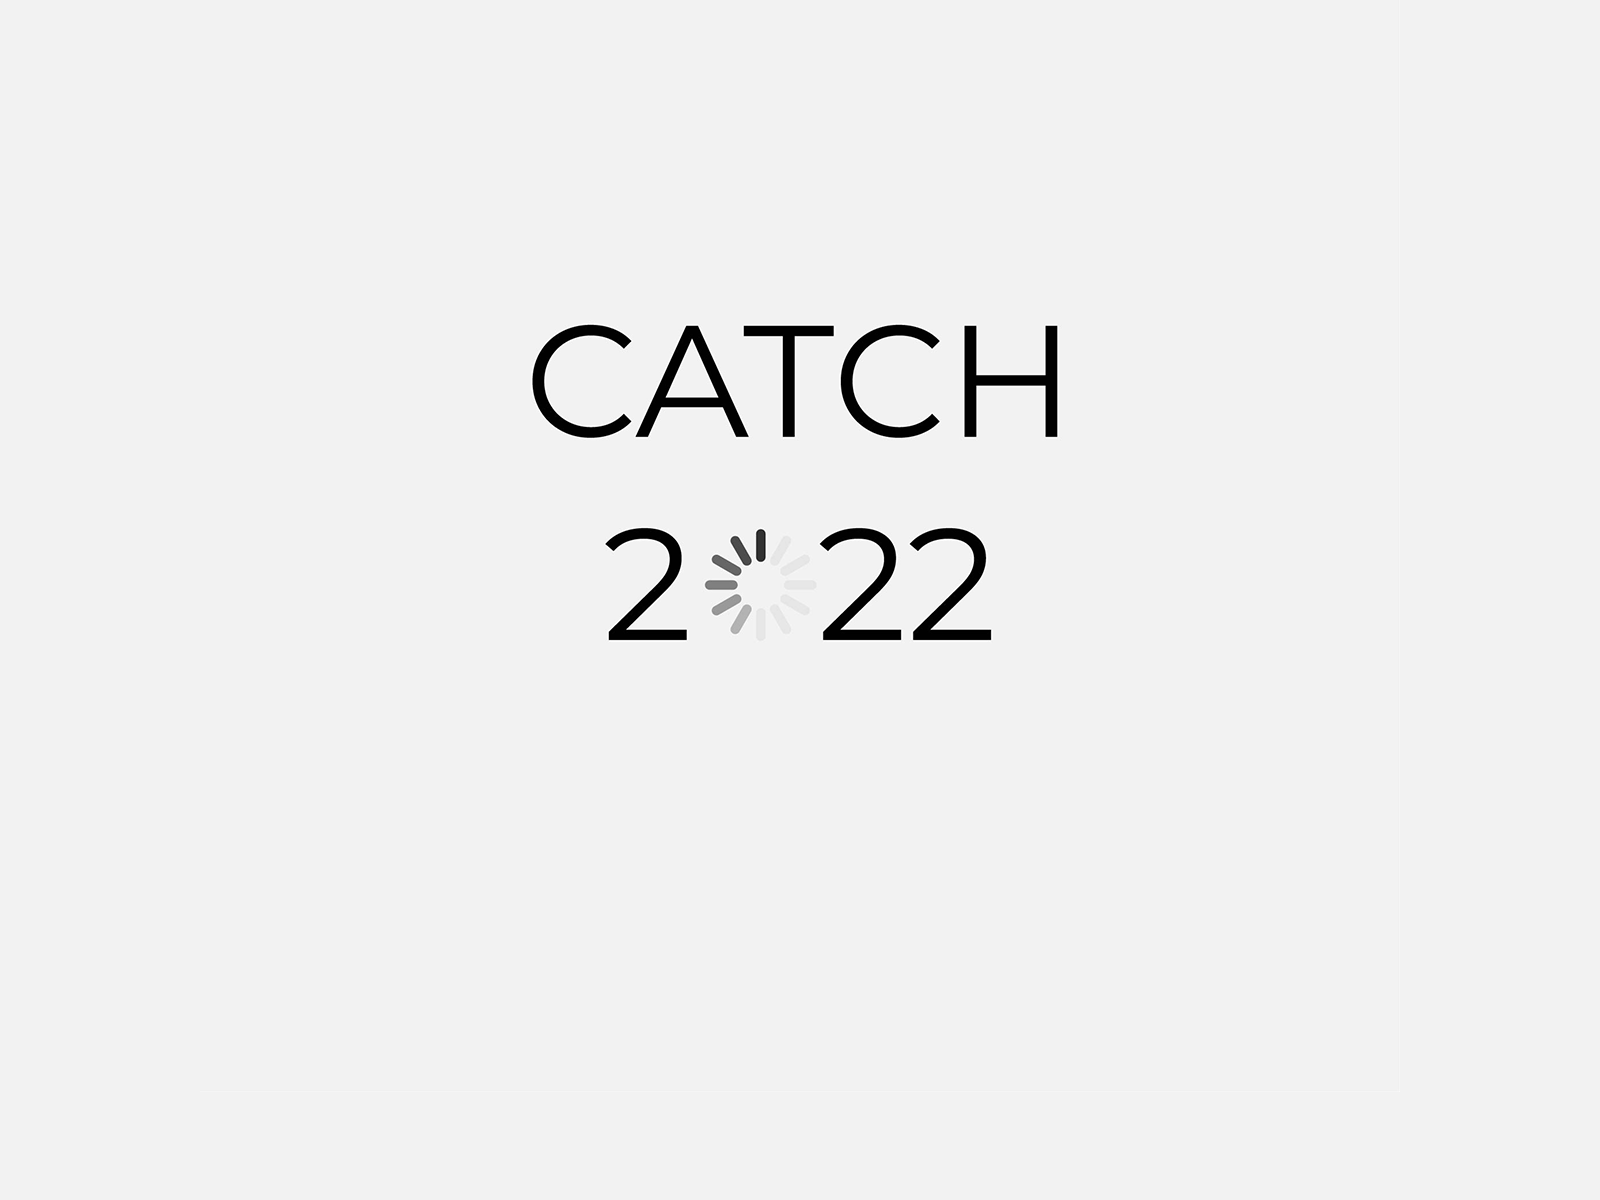 Catch '22 2022 catch 22 catch22 graphic design holiday